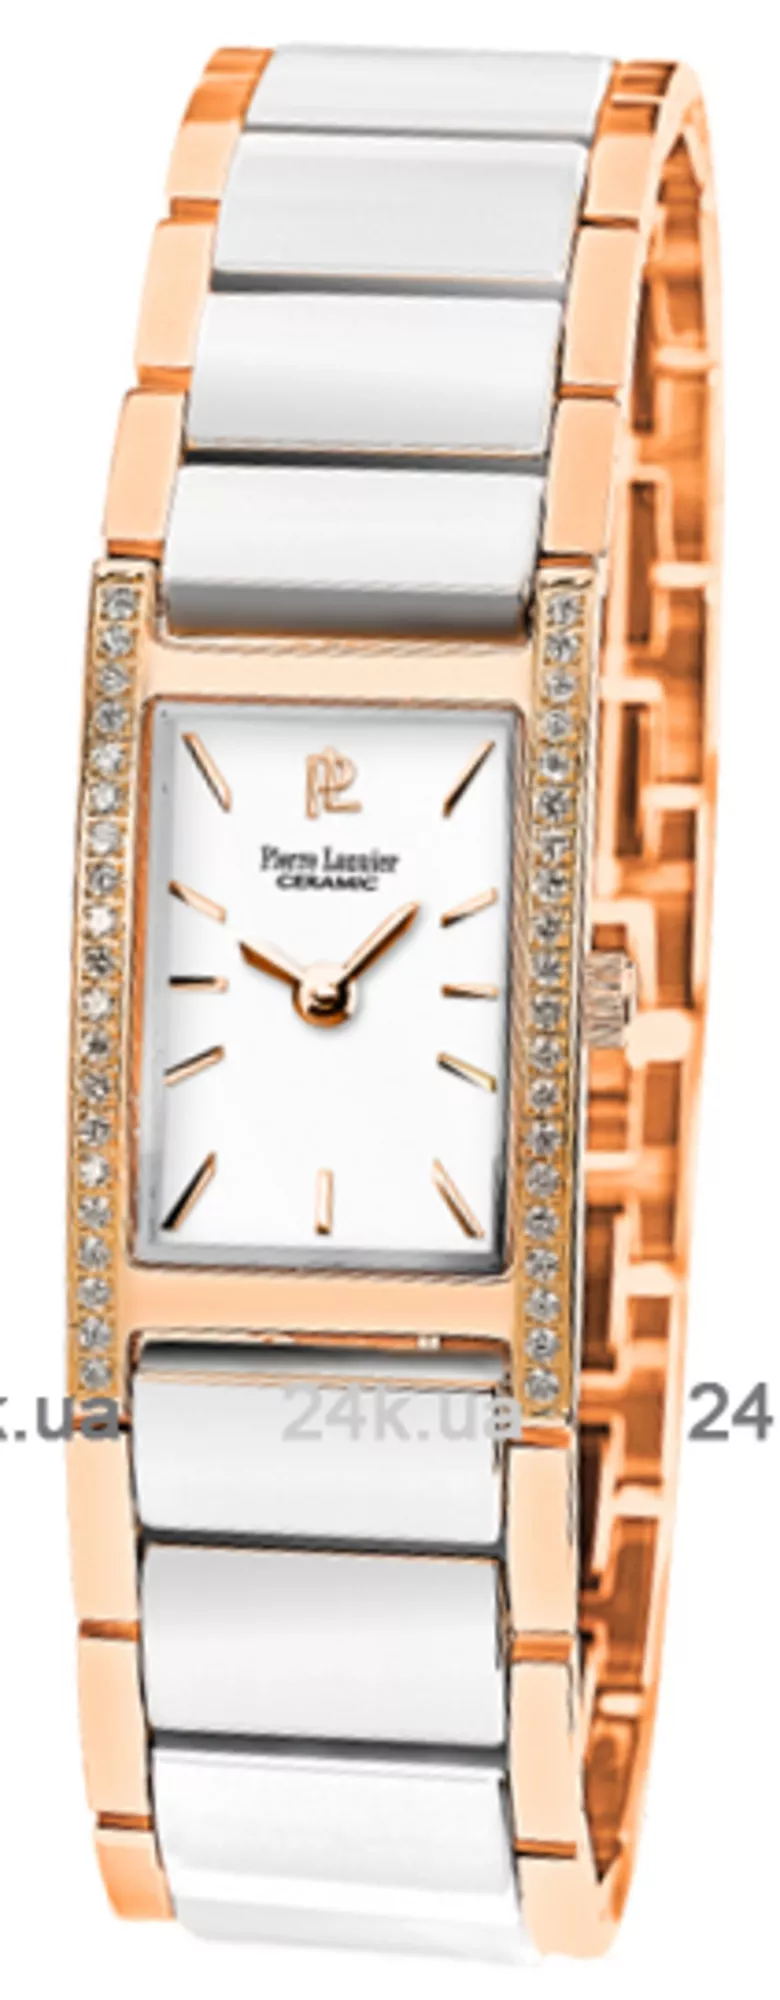 Часы Pierre Lannier 053G909